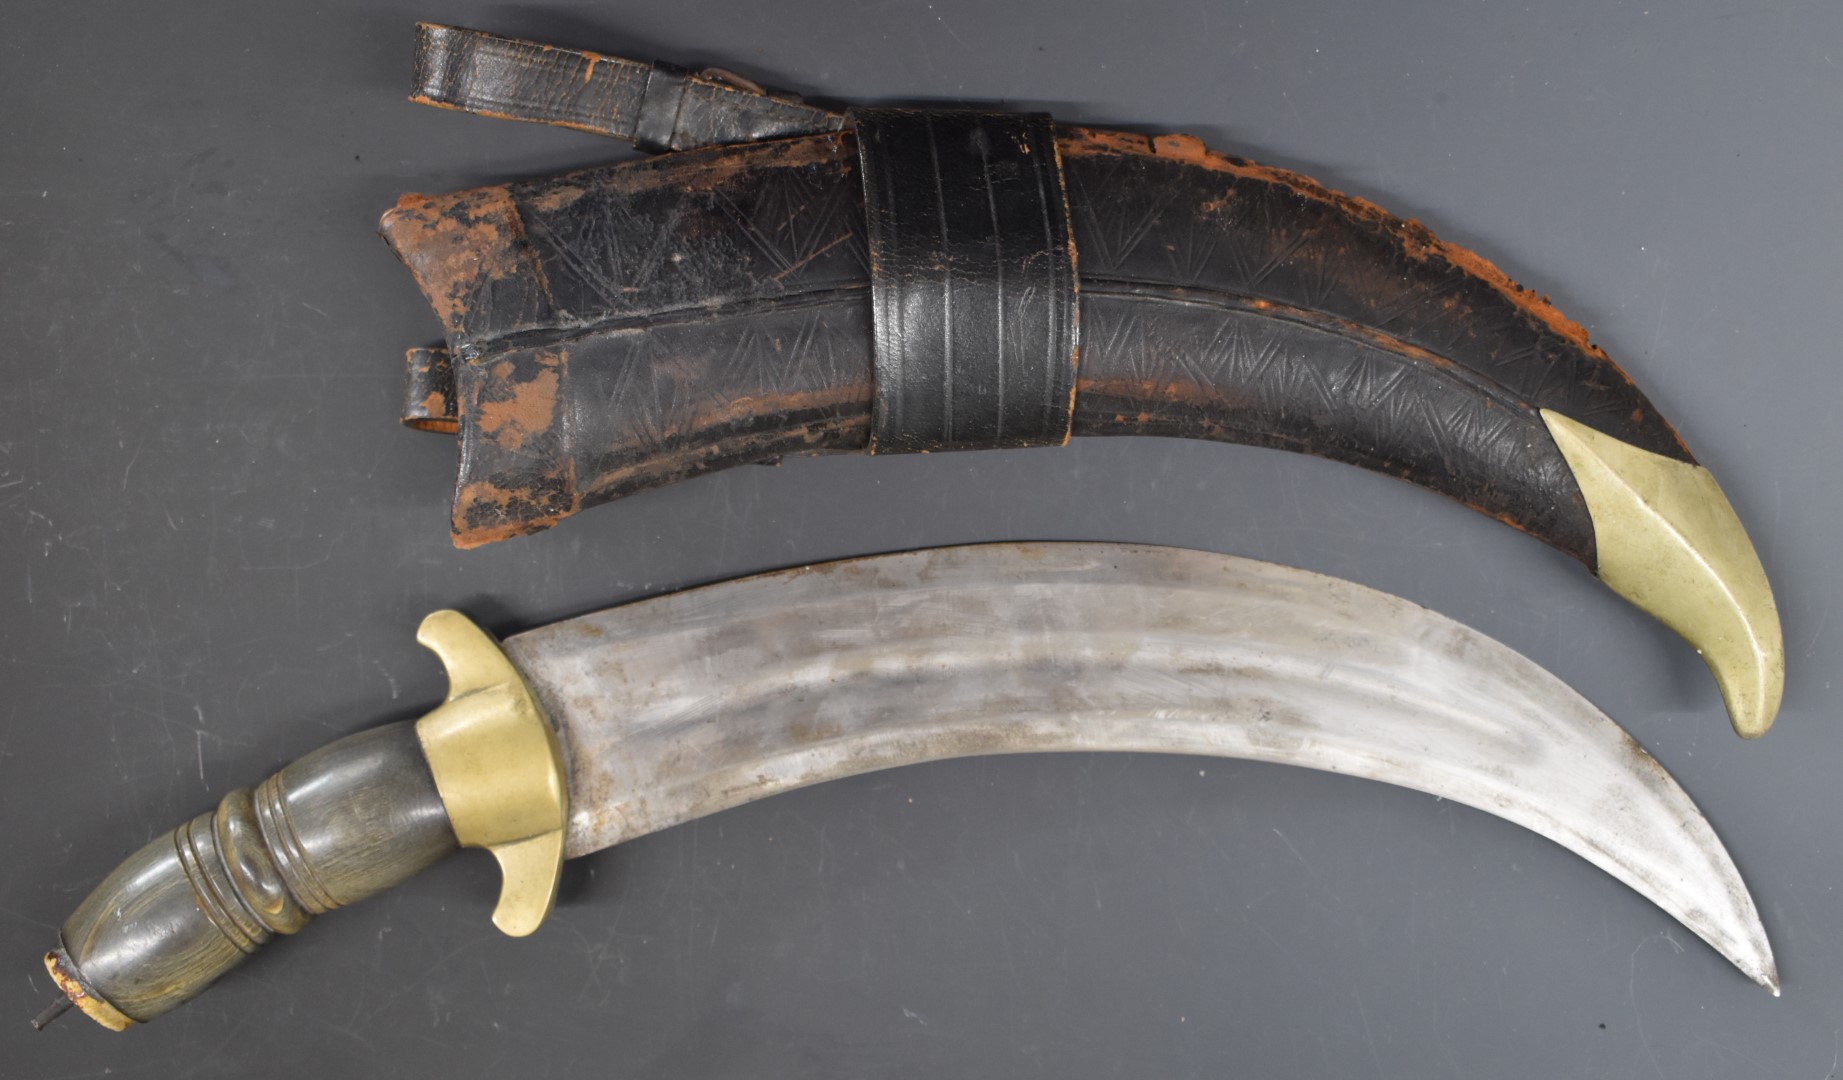 Khanjar style dagger with 32cm double edged blade and sheath